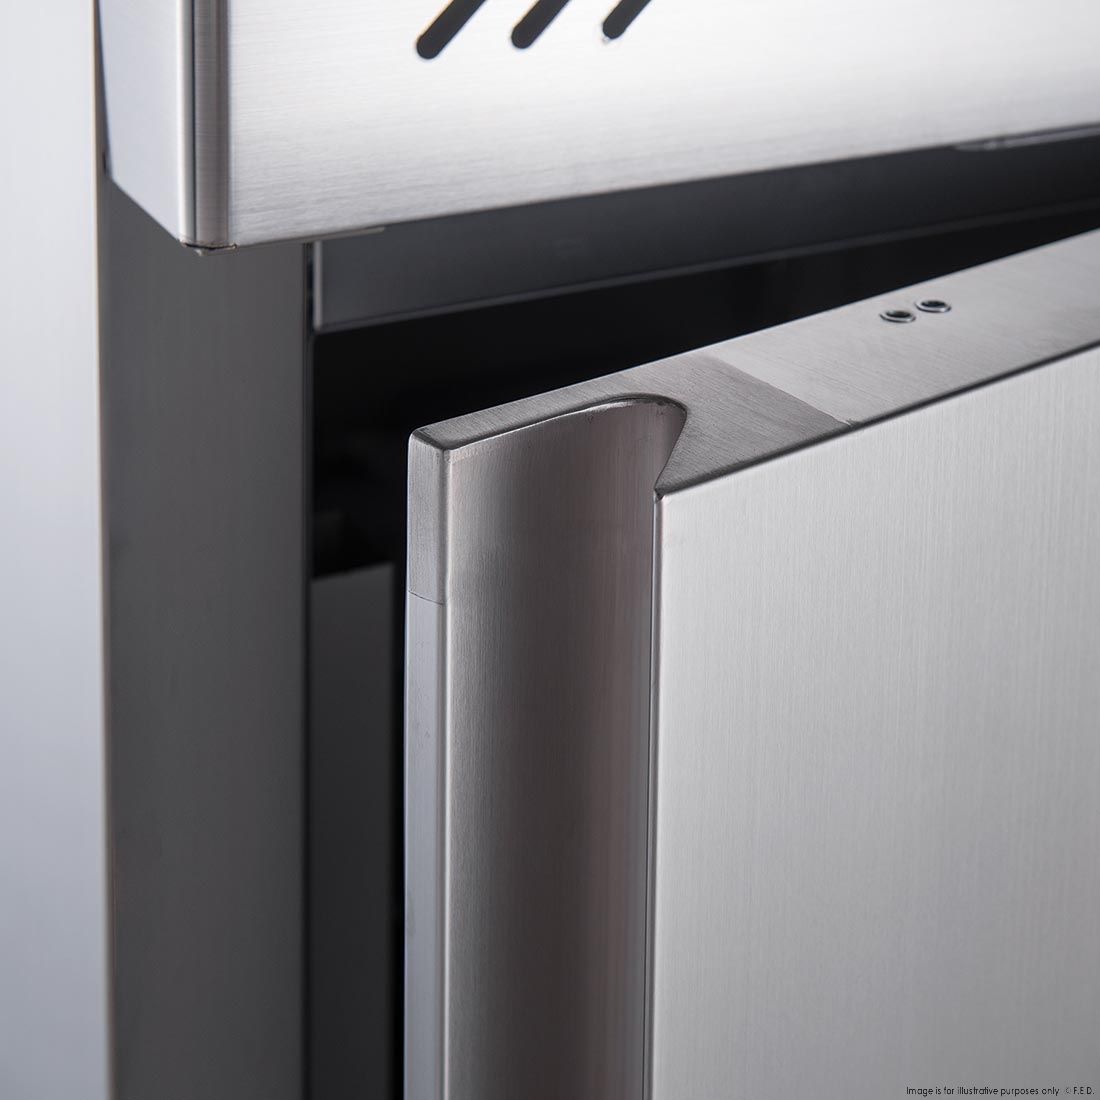 FED-X S/S Two Door Upright Freezer - XURF650S1V